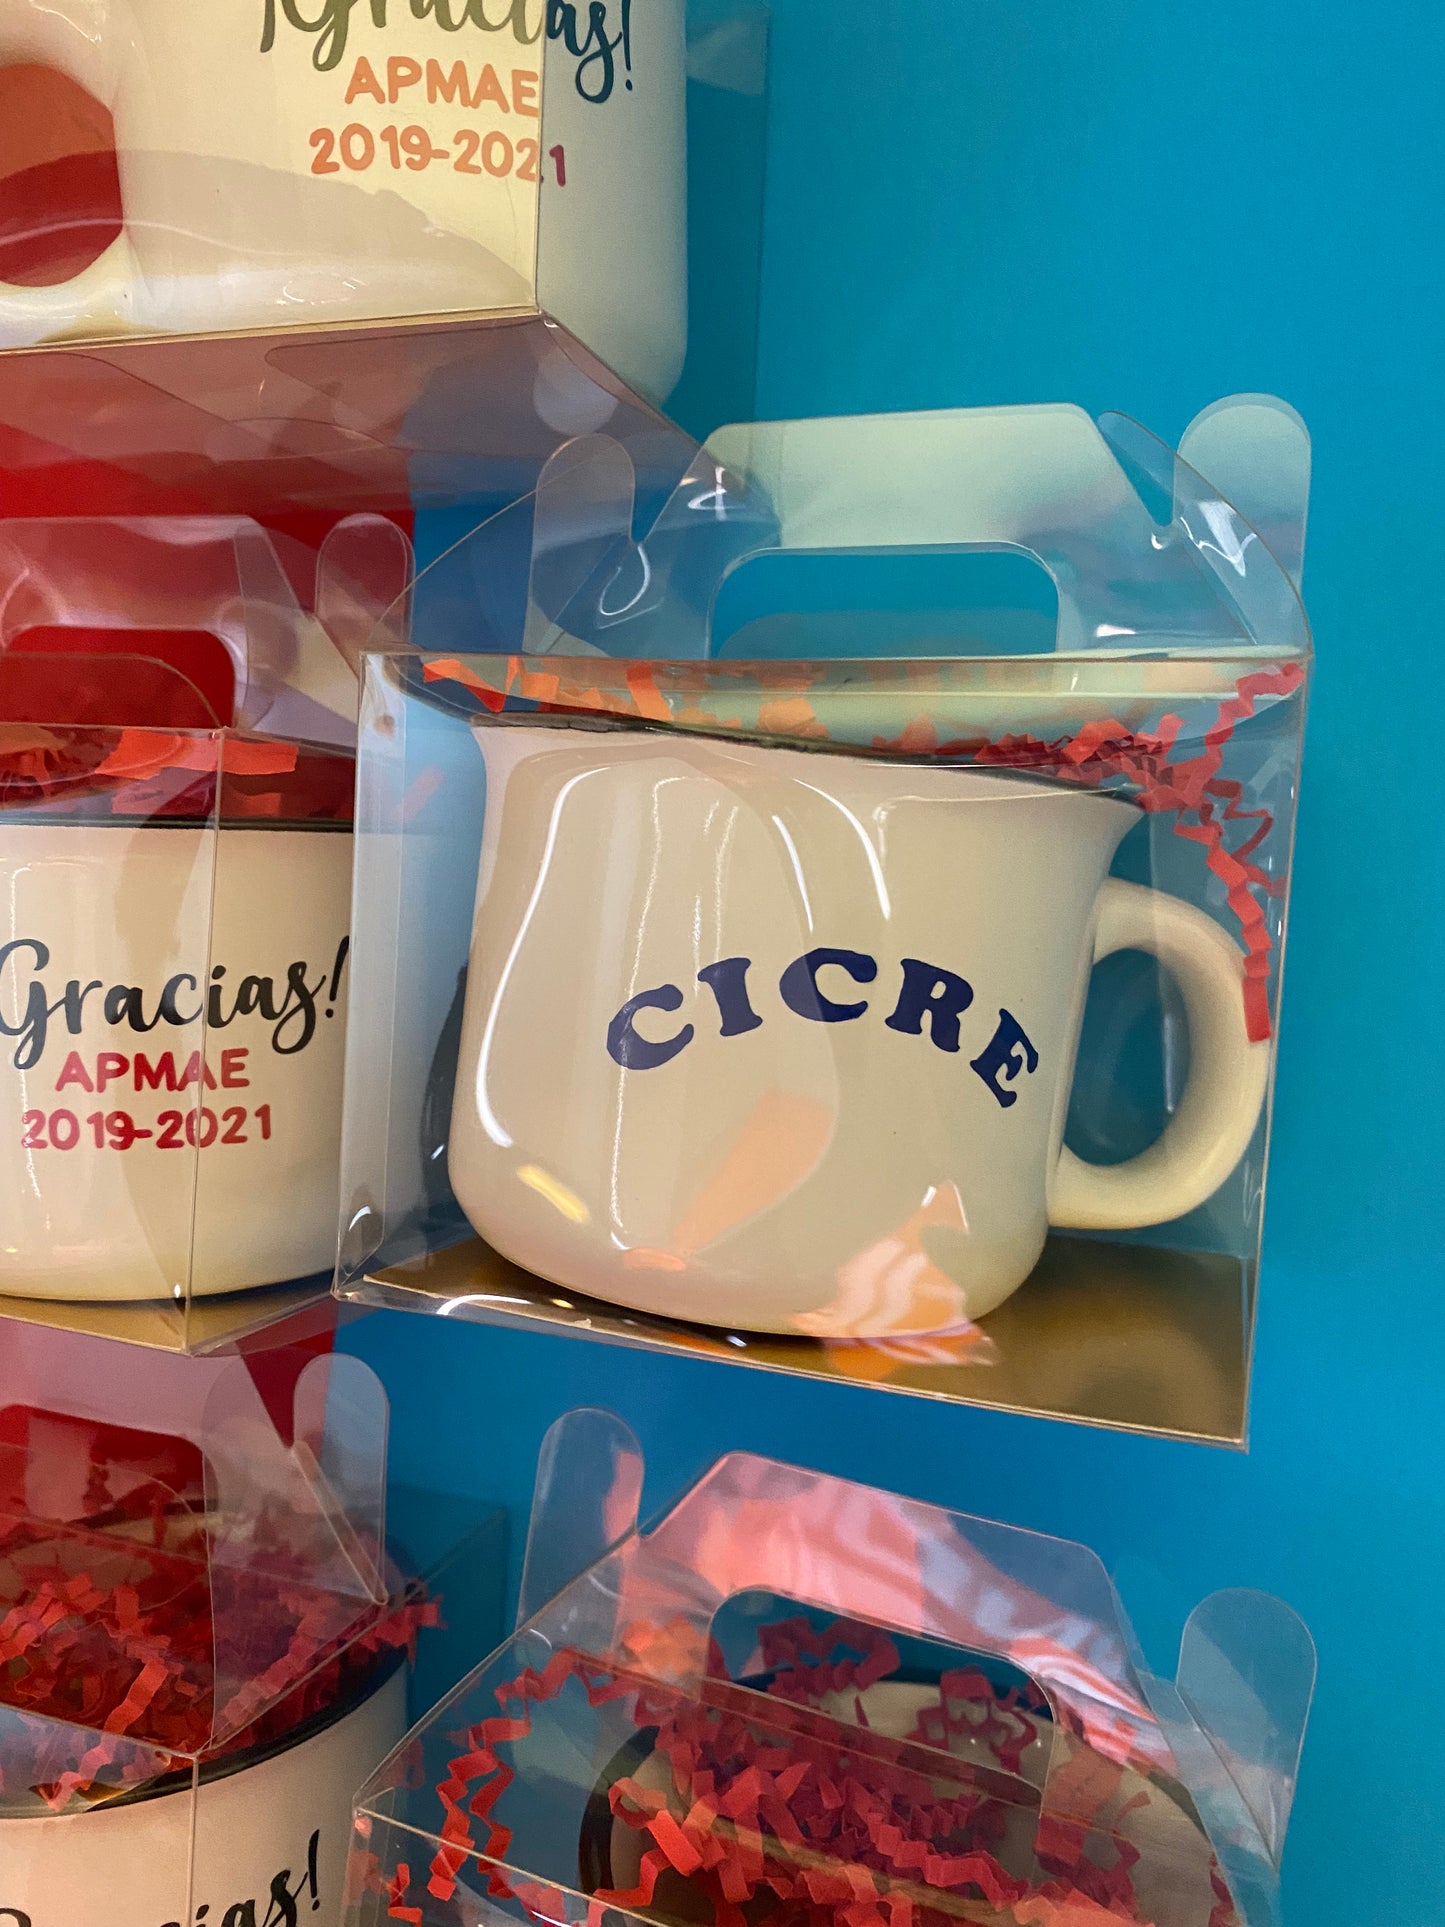 Mini Cera mugs